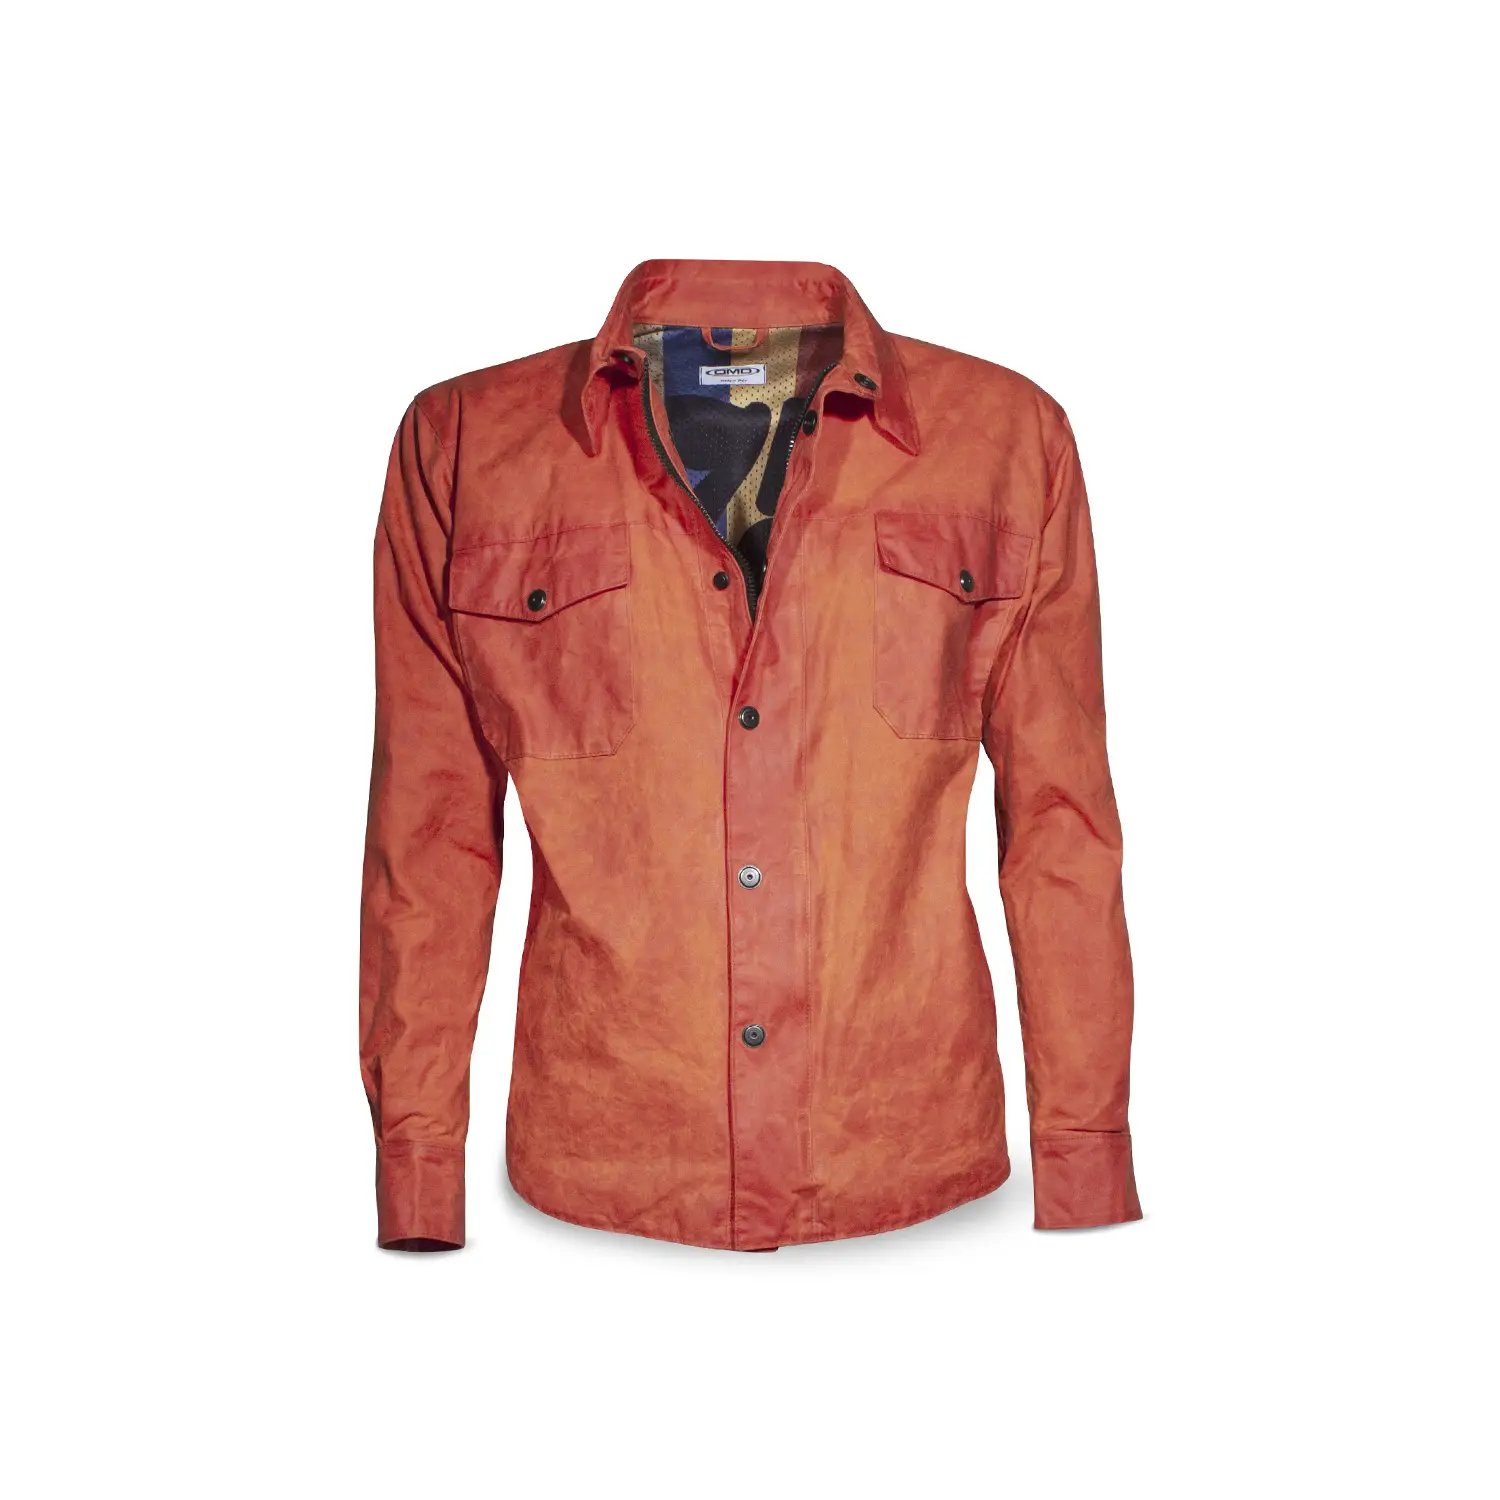 dmd.eu - SHIRT ORANGE (NO HOMOLOGADA) DMD – Shirt Orange Waxed Cotton (non omologato) – front